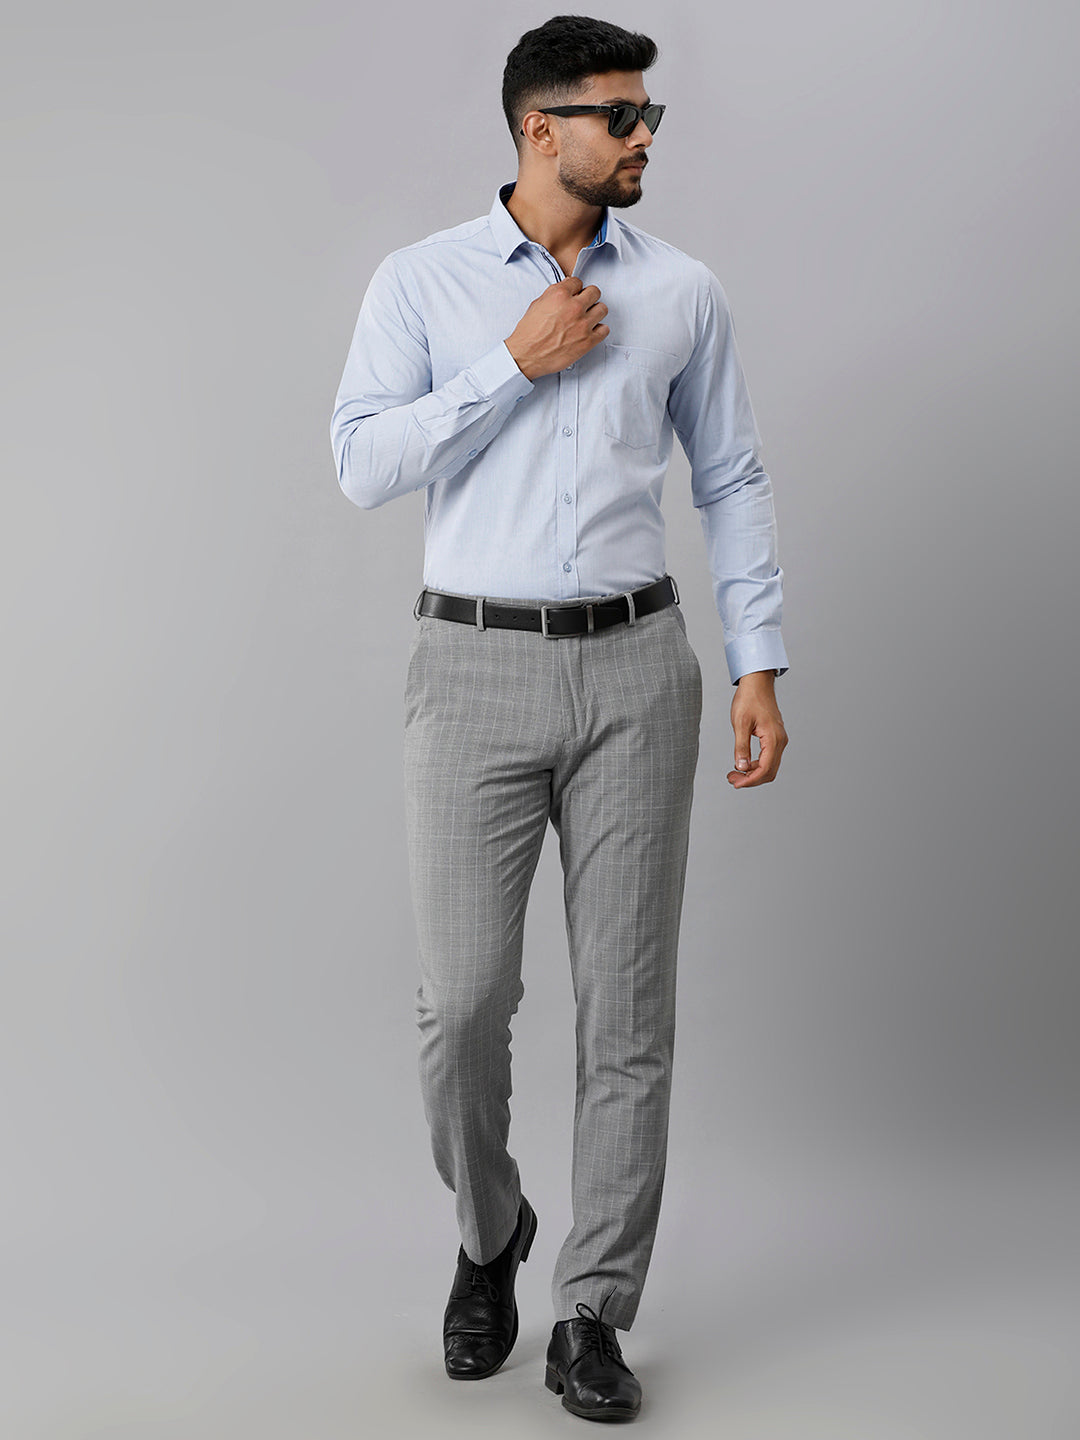 Mens Premium Cotton Formal Shirt Full Sleeves Blue MH G119-Full view